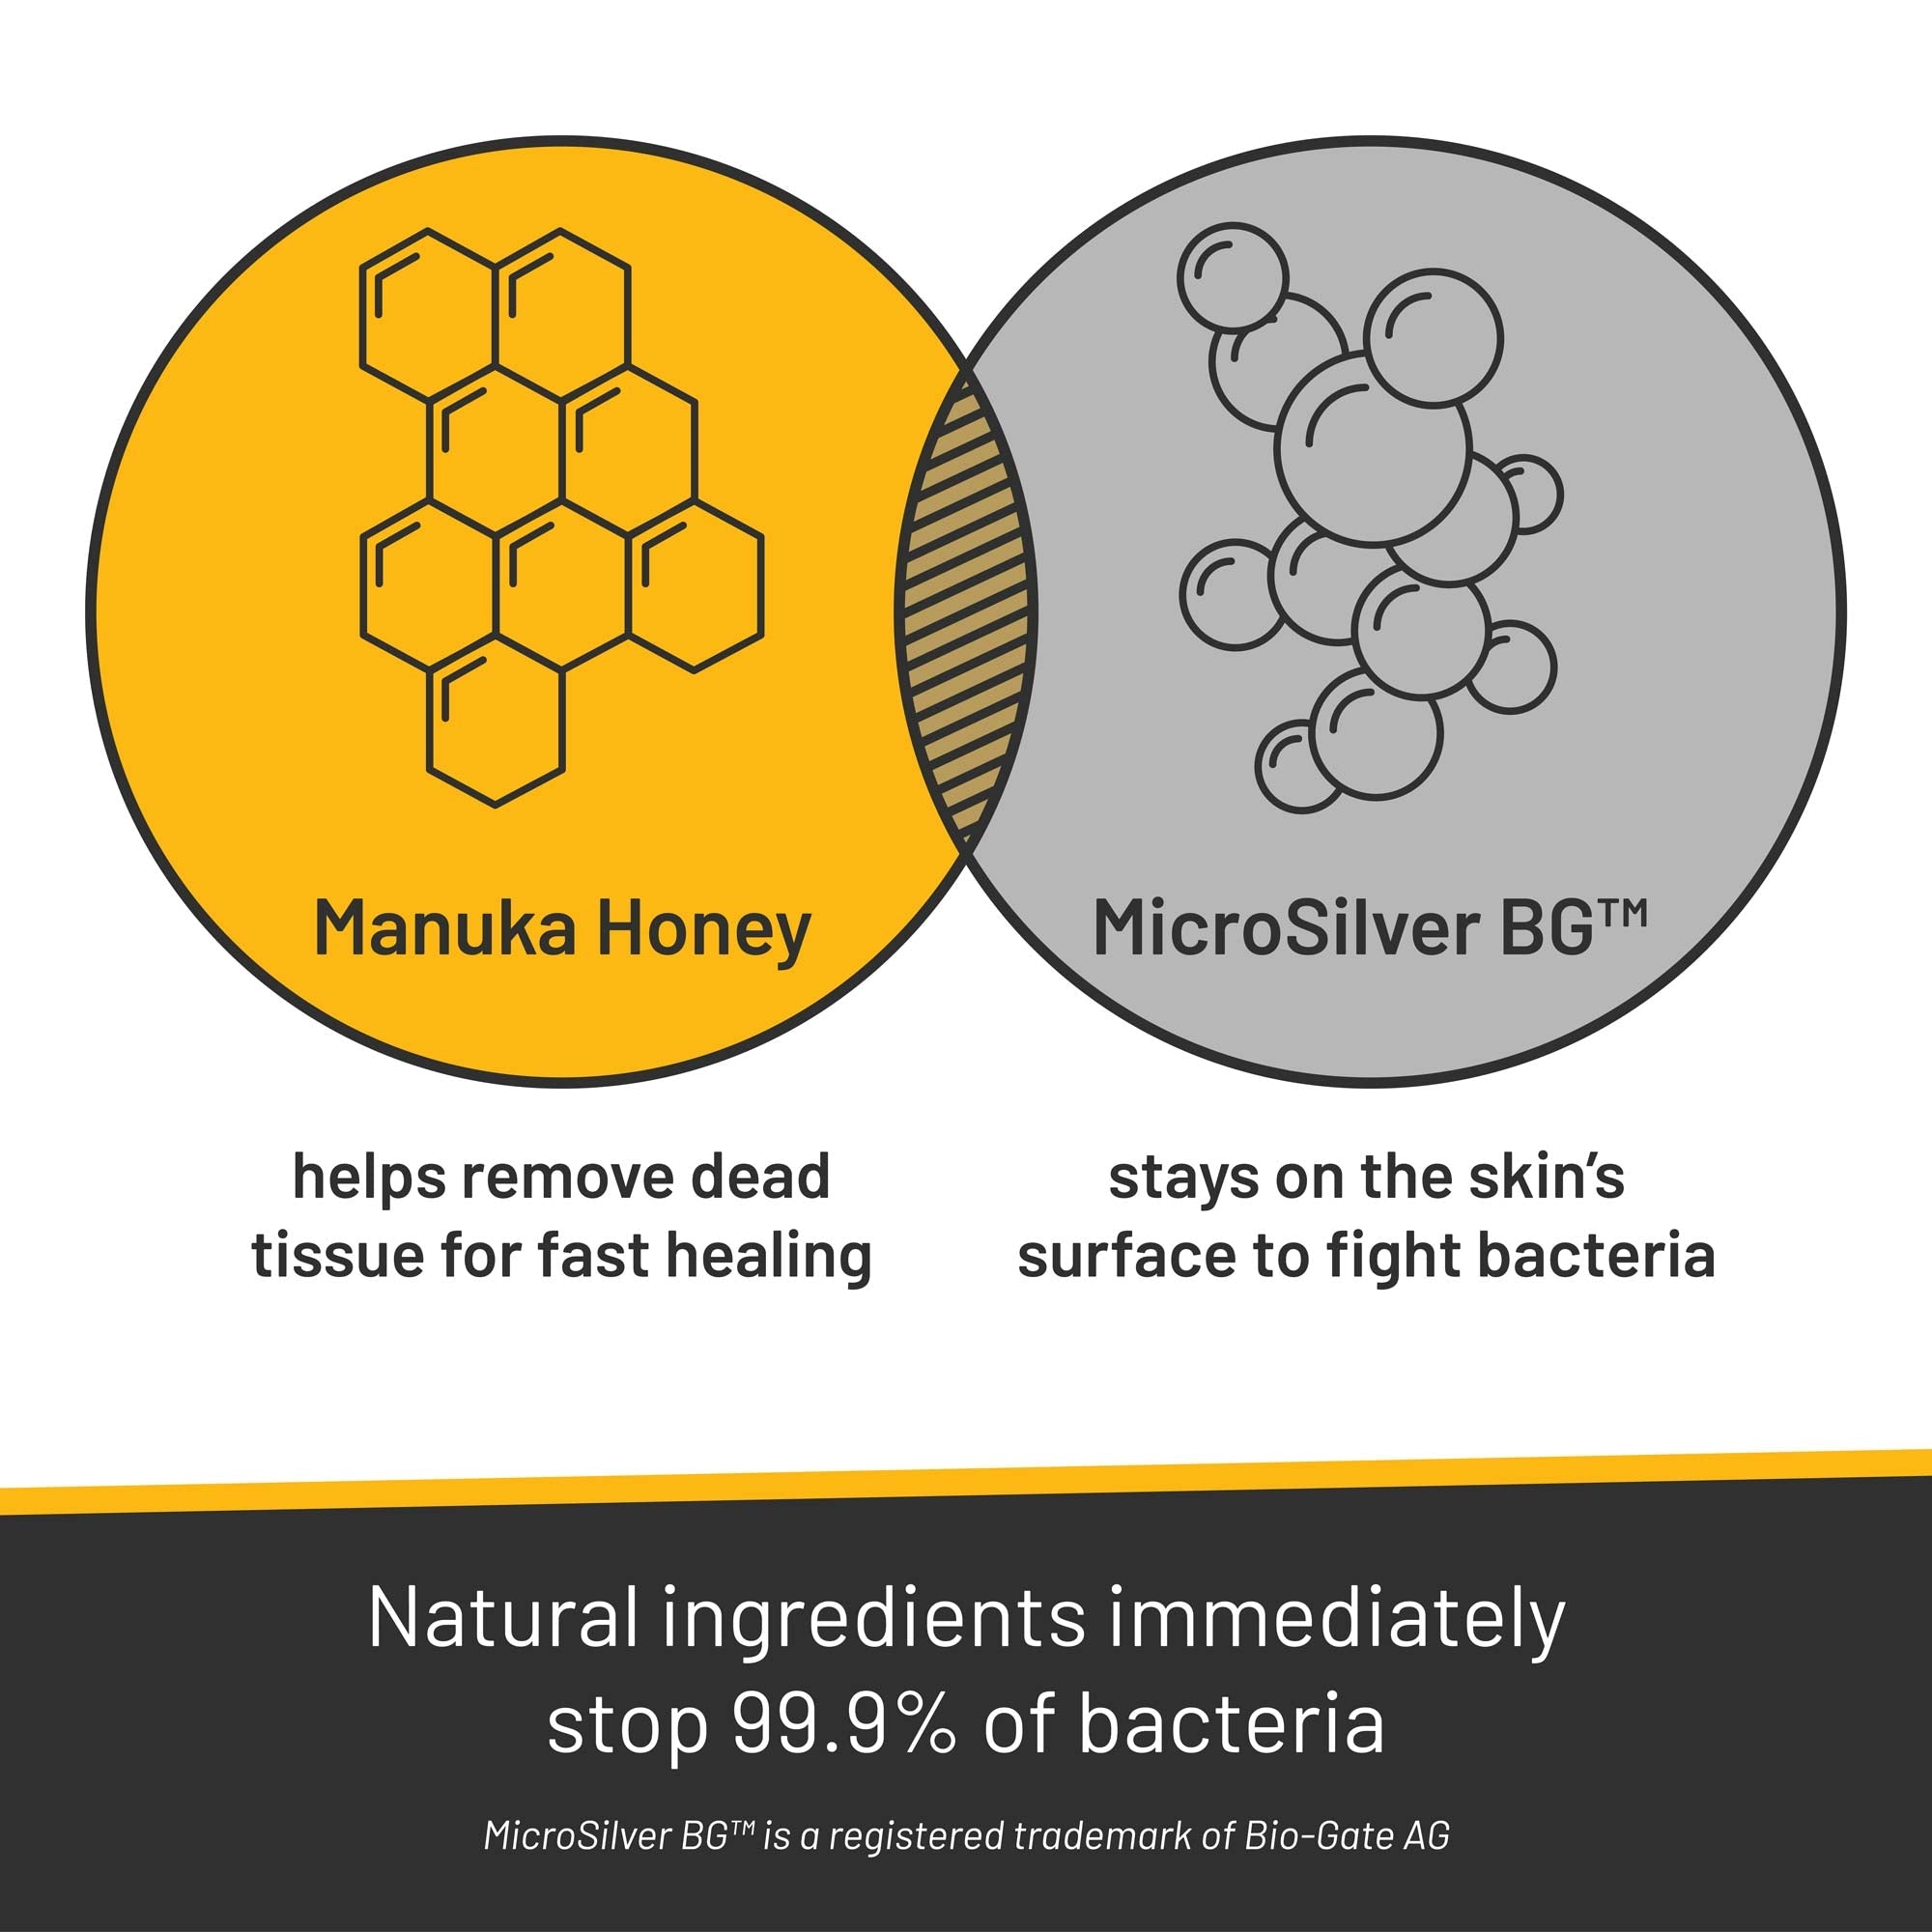 Venn diagram of Manuka Honey and Microsilver BG. Manuka honey helps remove dead tissue for fast healing. Microsilver BG stays on the skin's surface to fight bacteria.